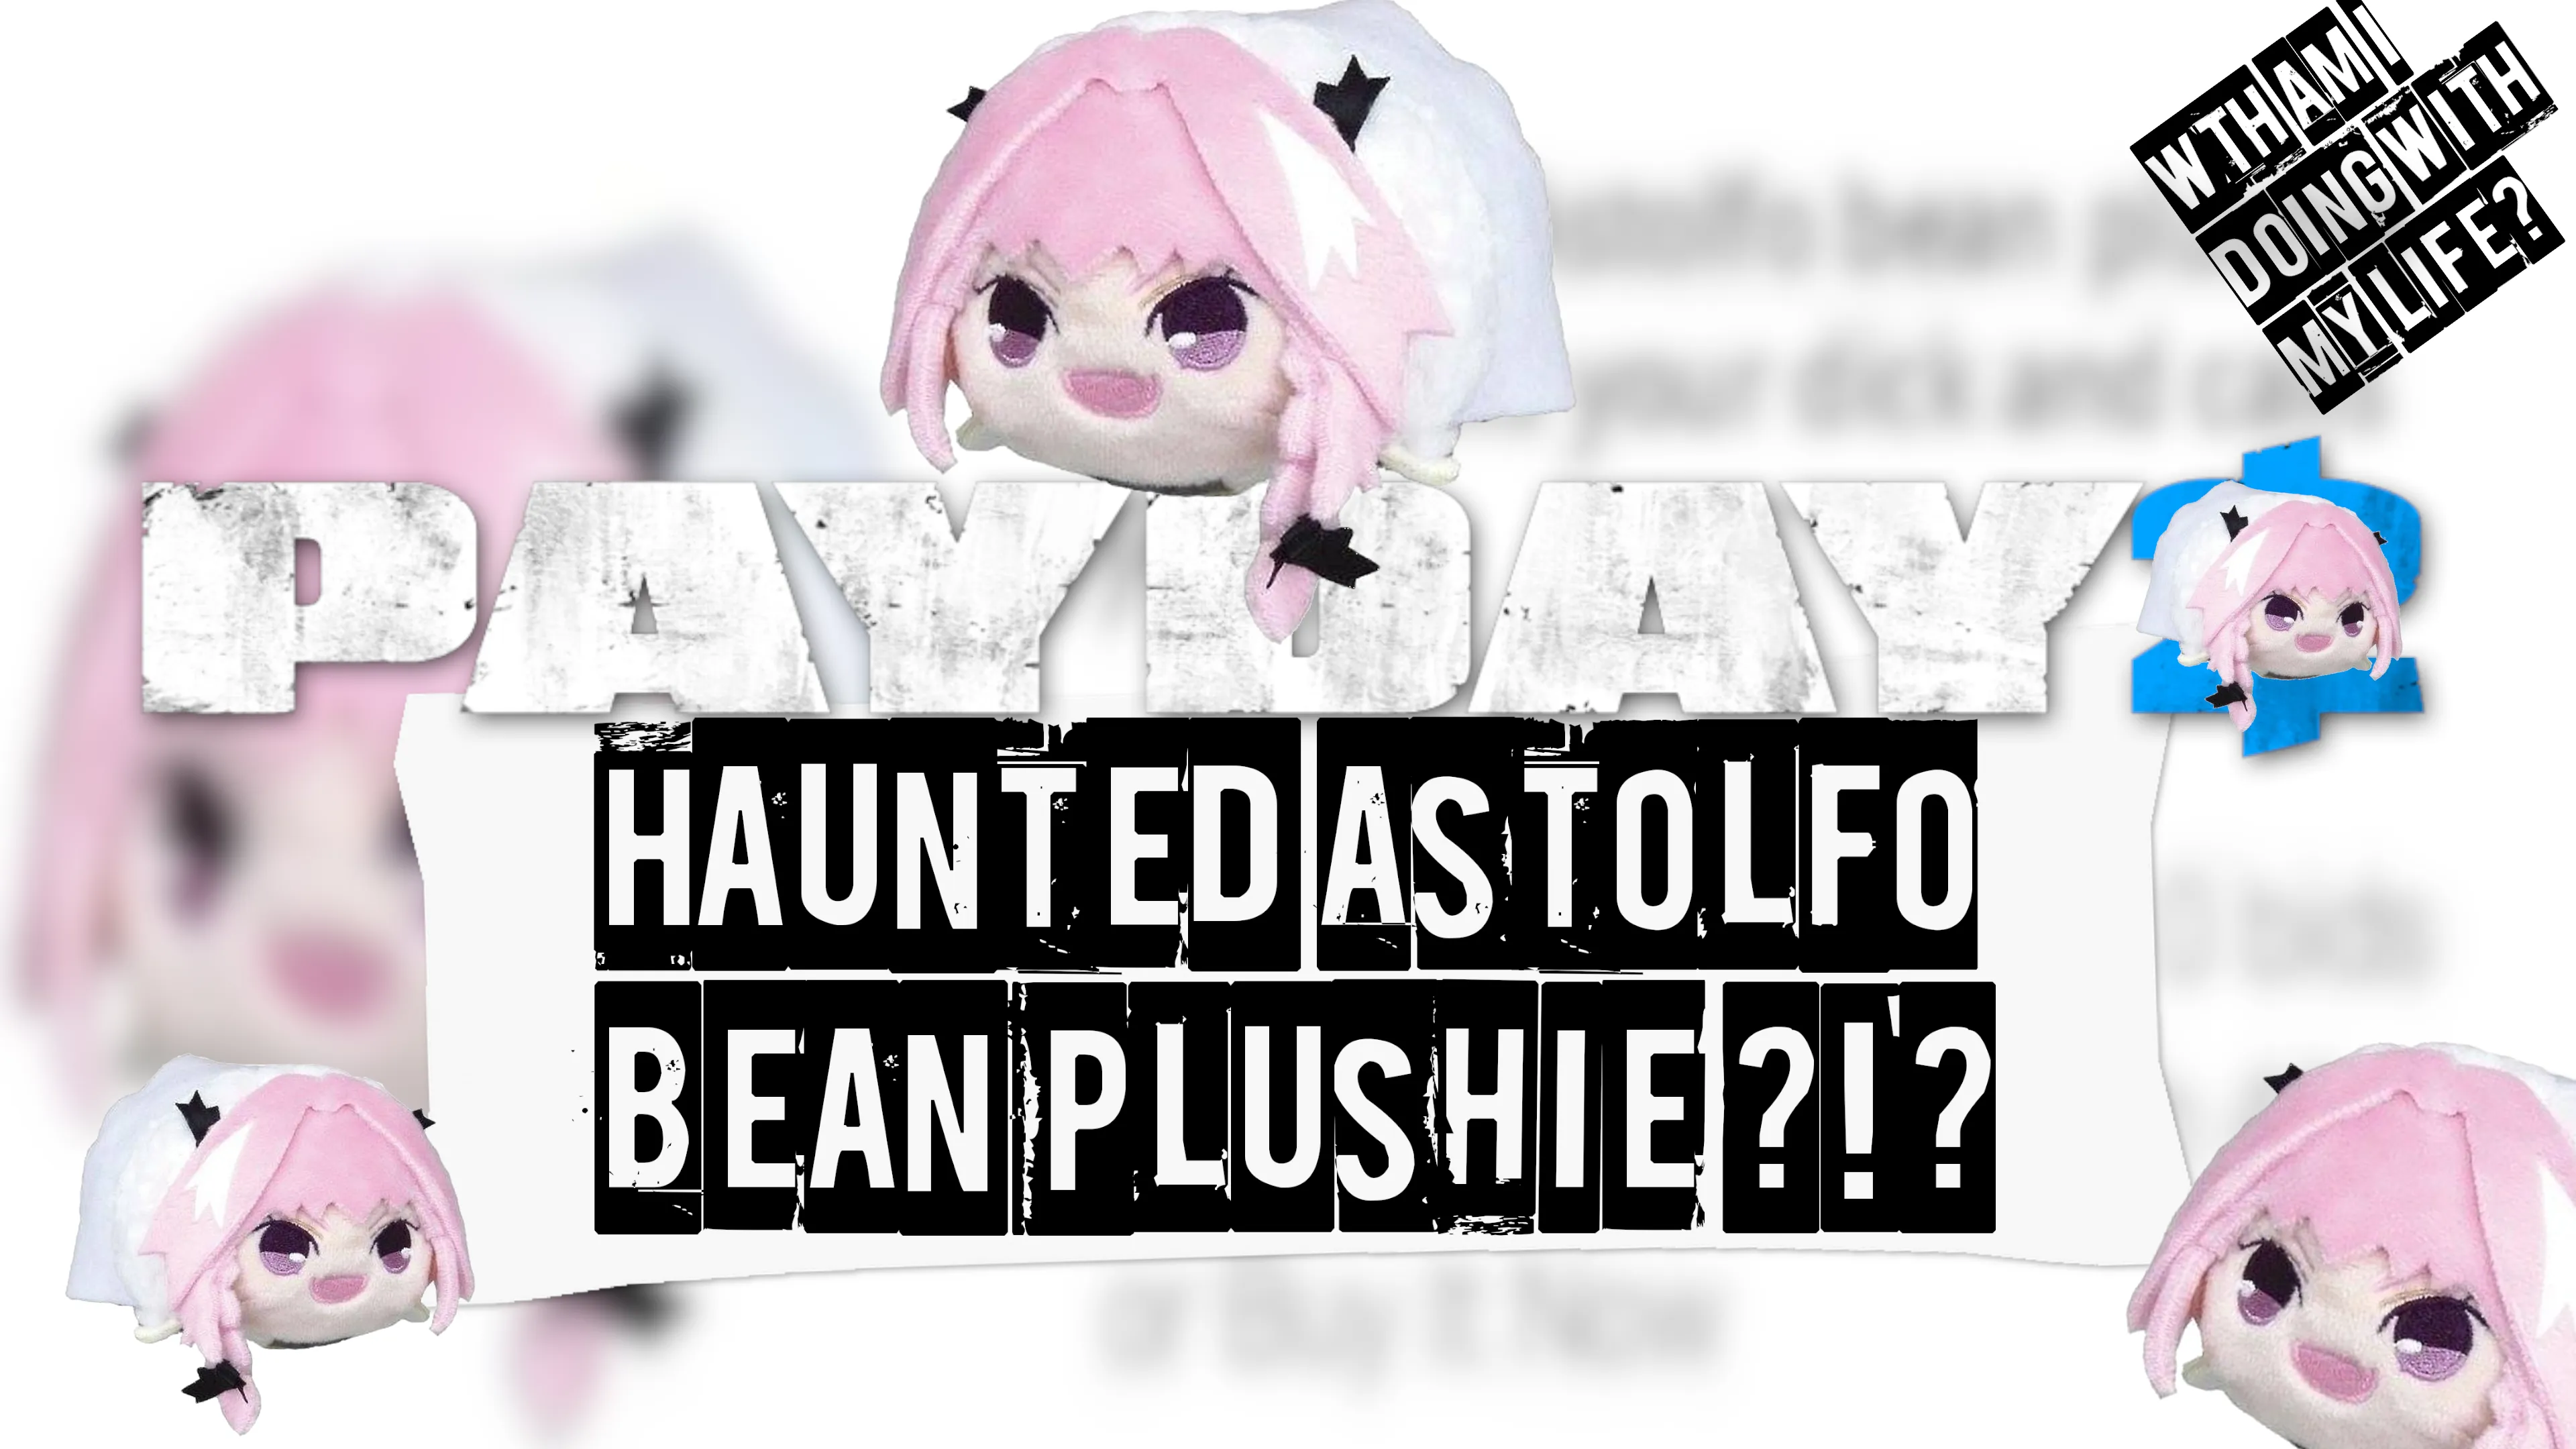 Haunted Astolfo Bean Plushie Body Pillow Dakimakura Fate Fate